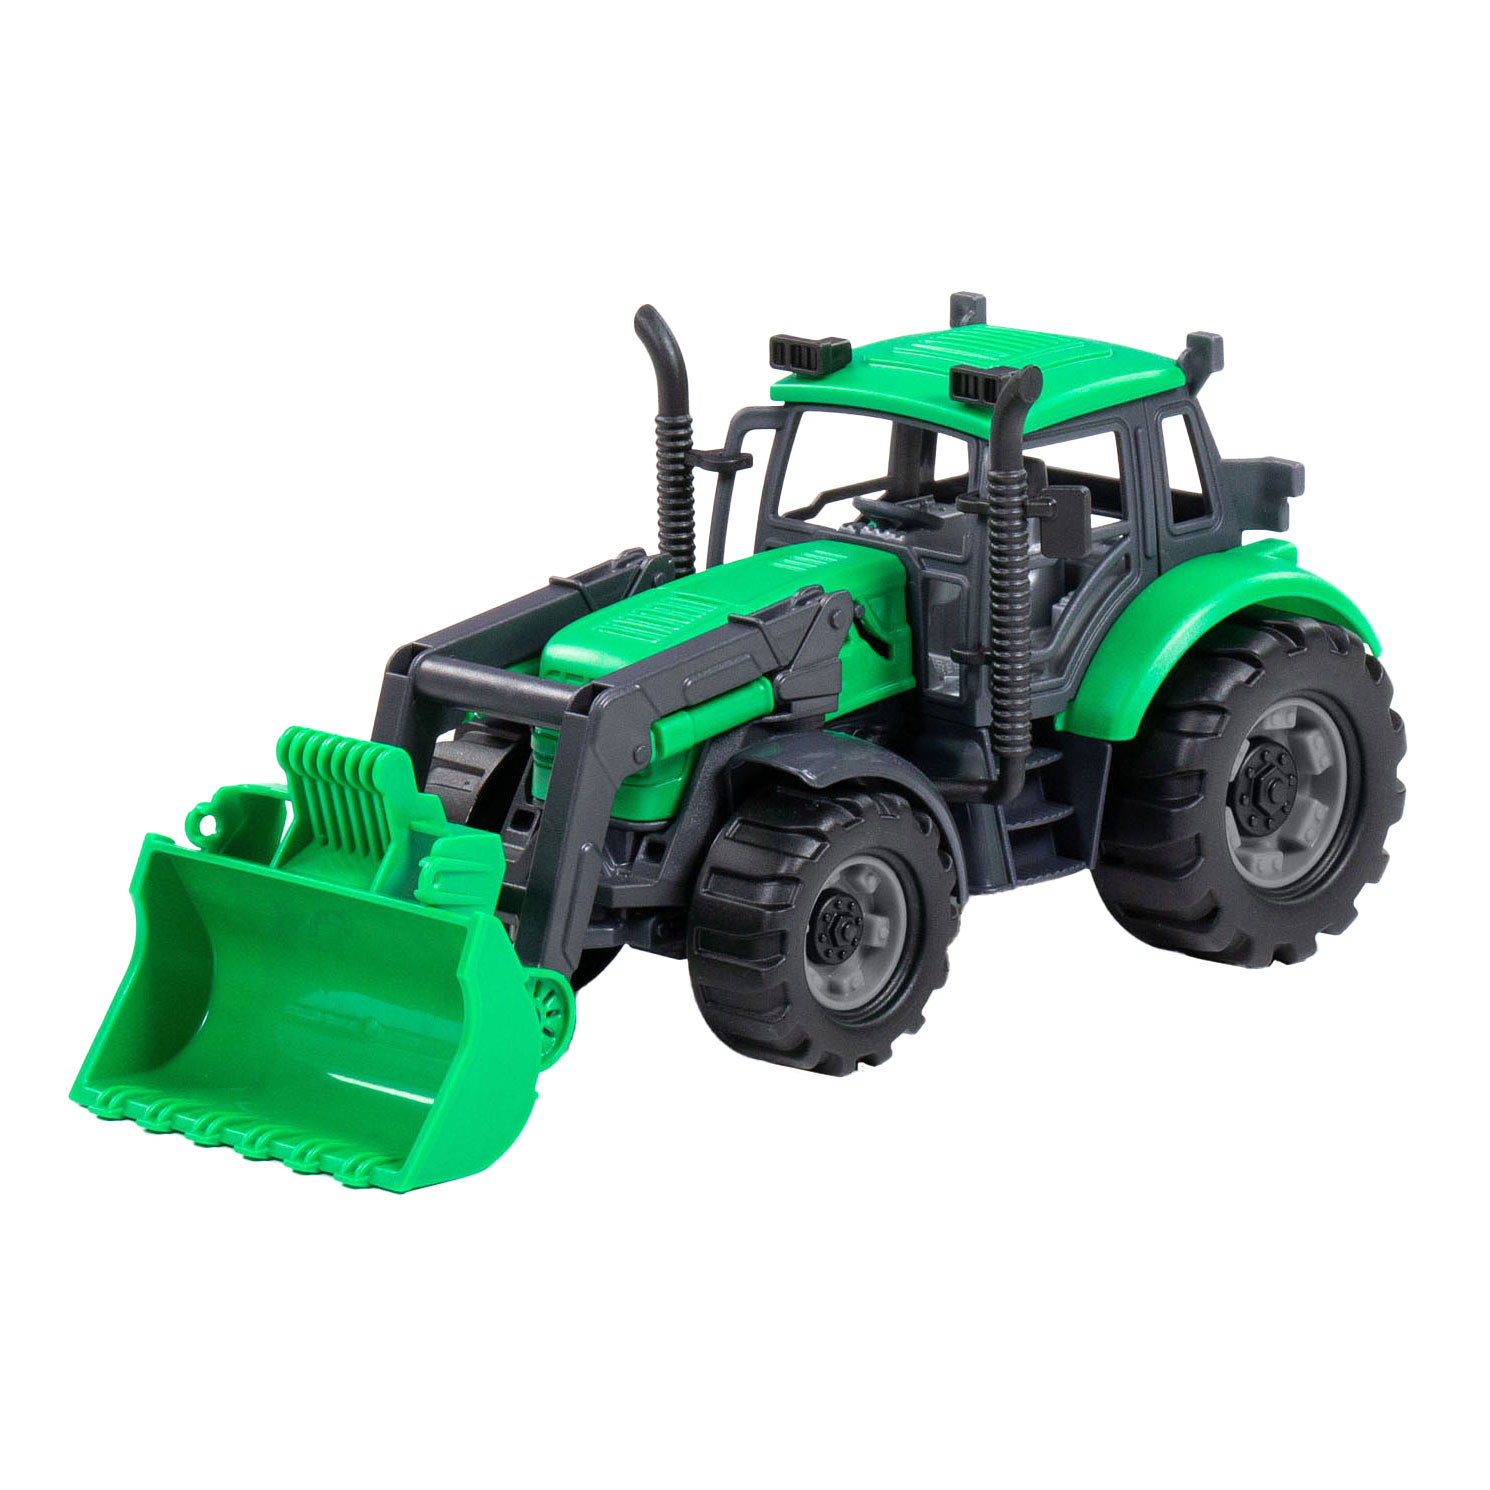 Cavallino Tracteur avec Pelle Vert, Échelle 1:32